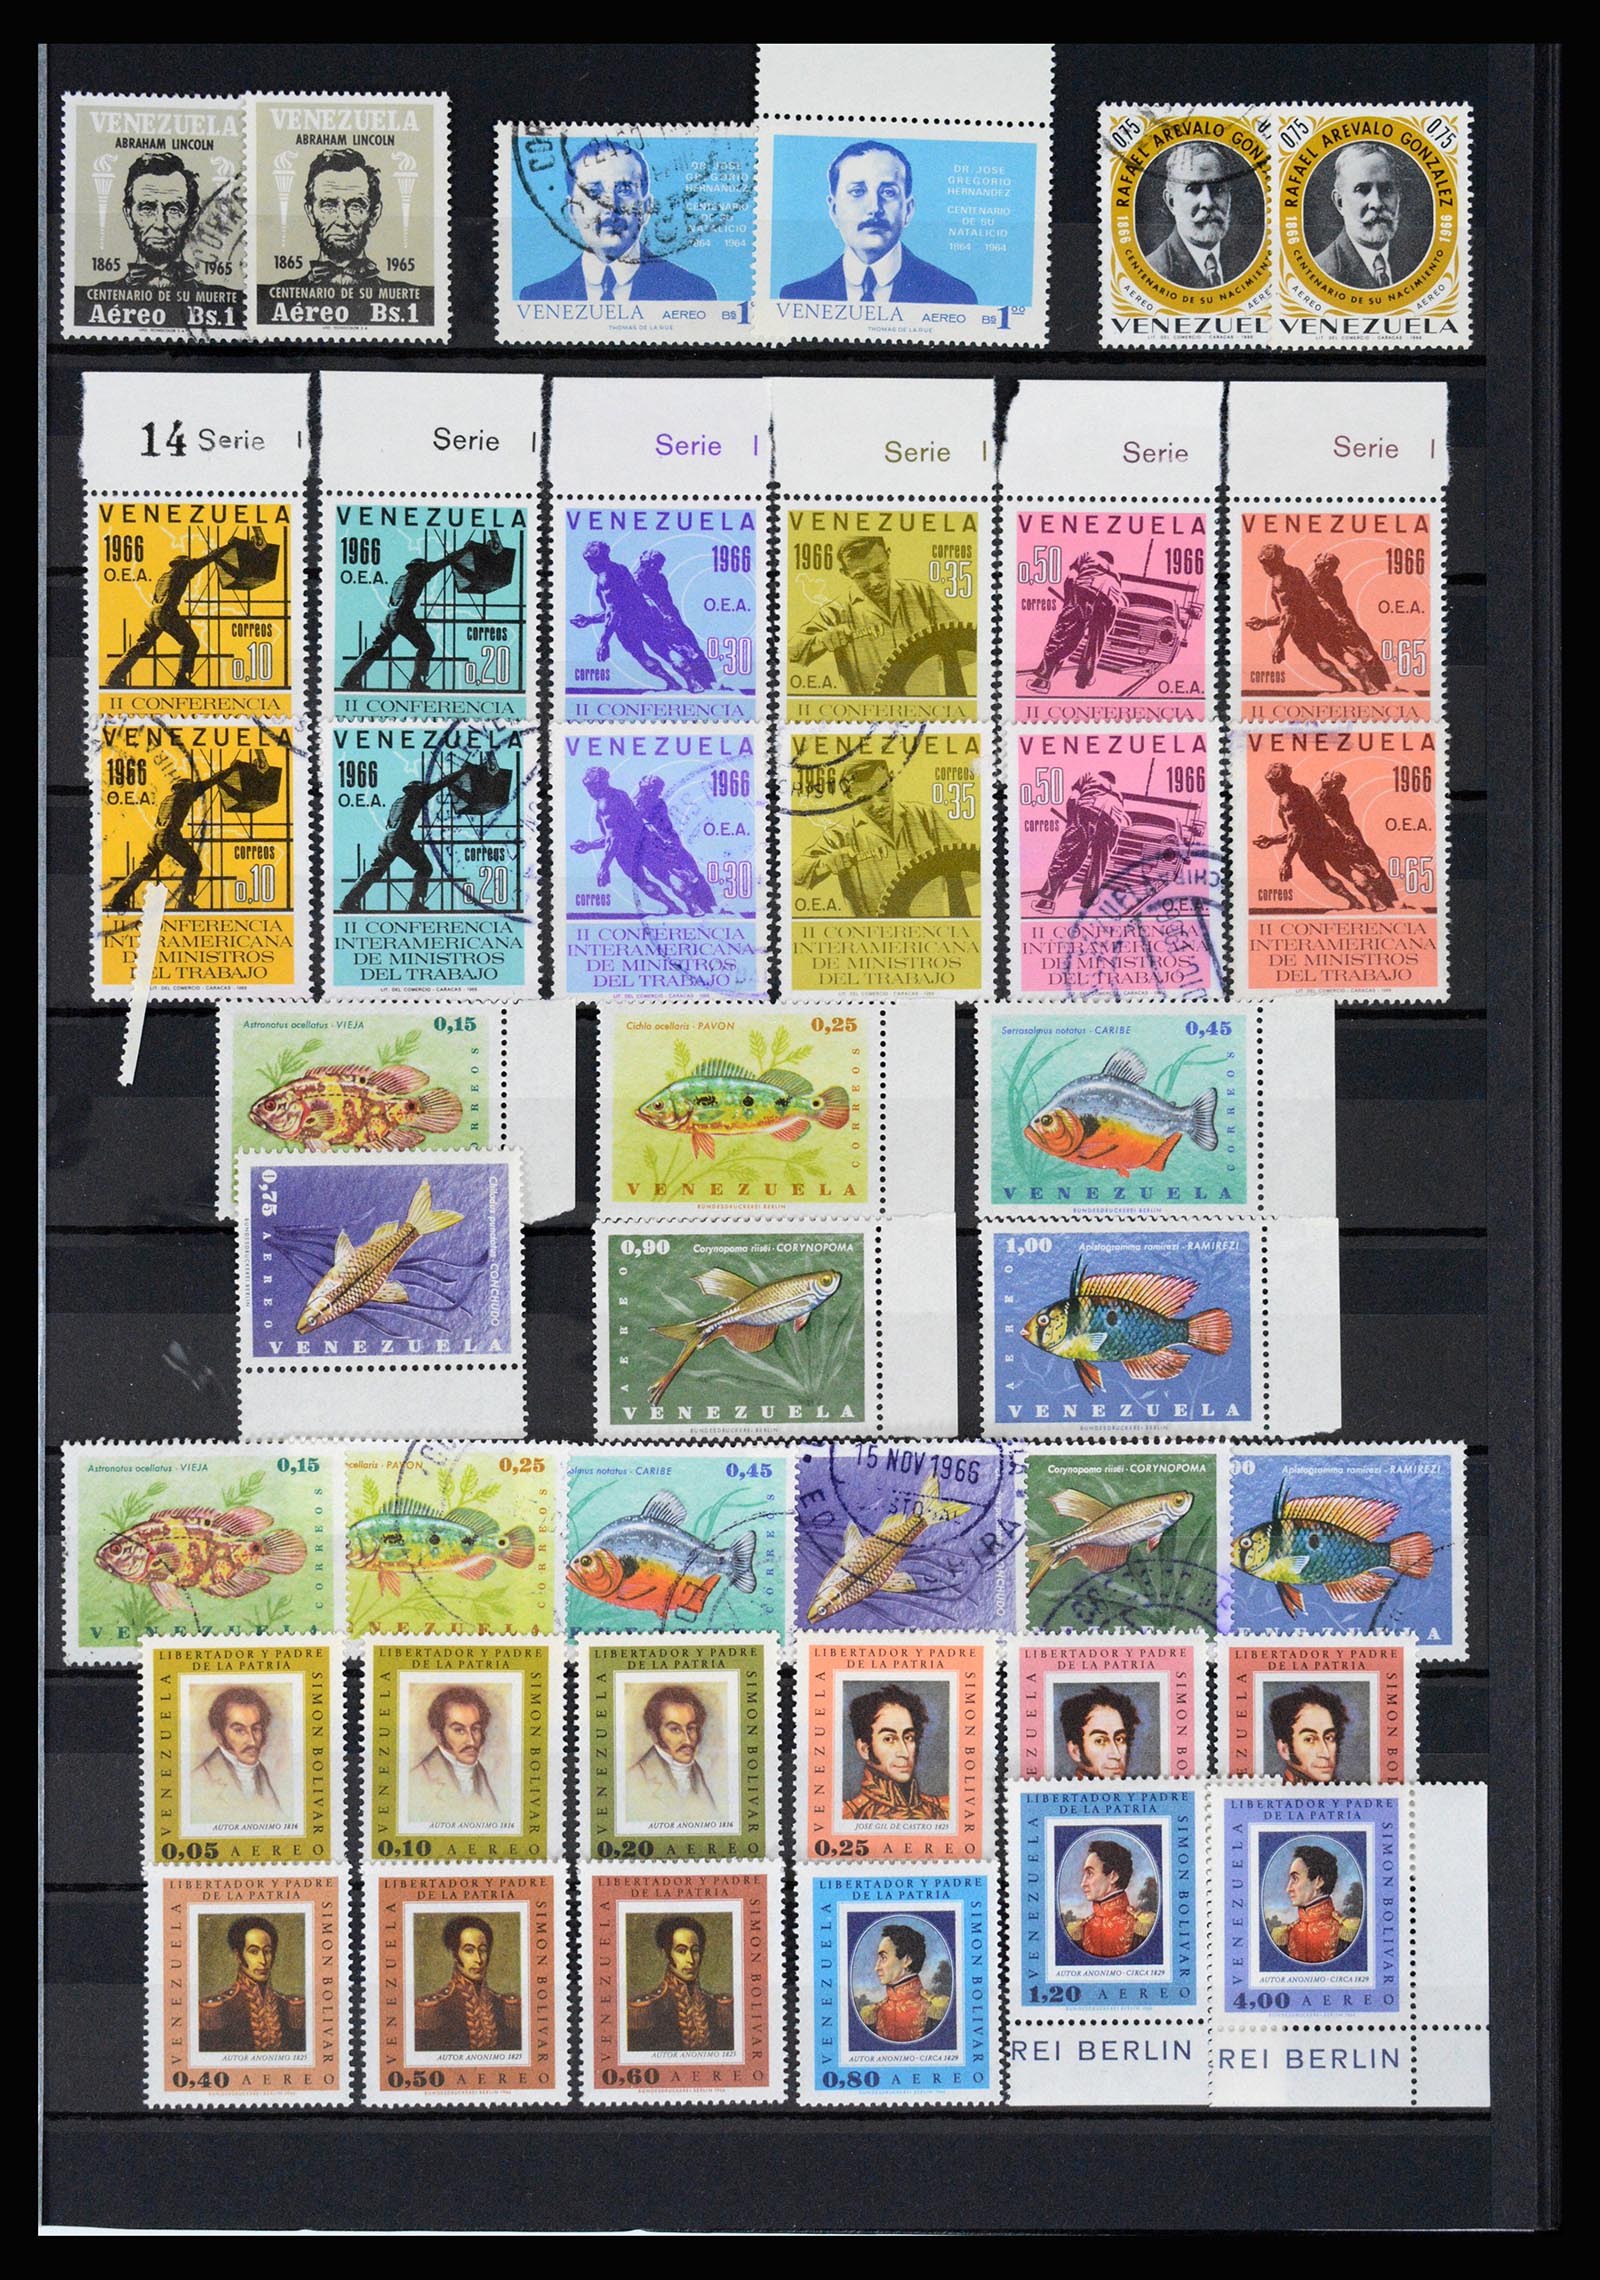 36987 048 - Stamp collection 36987 Venezuela 1860-1995.